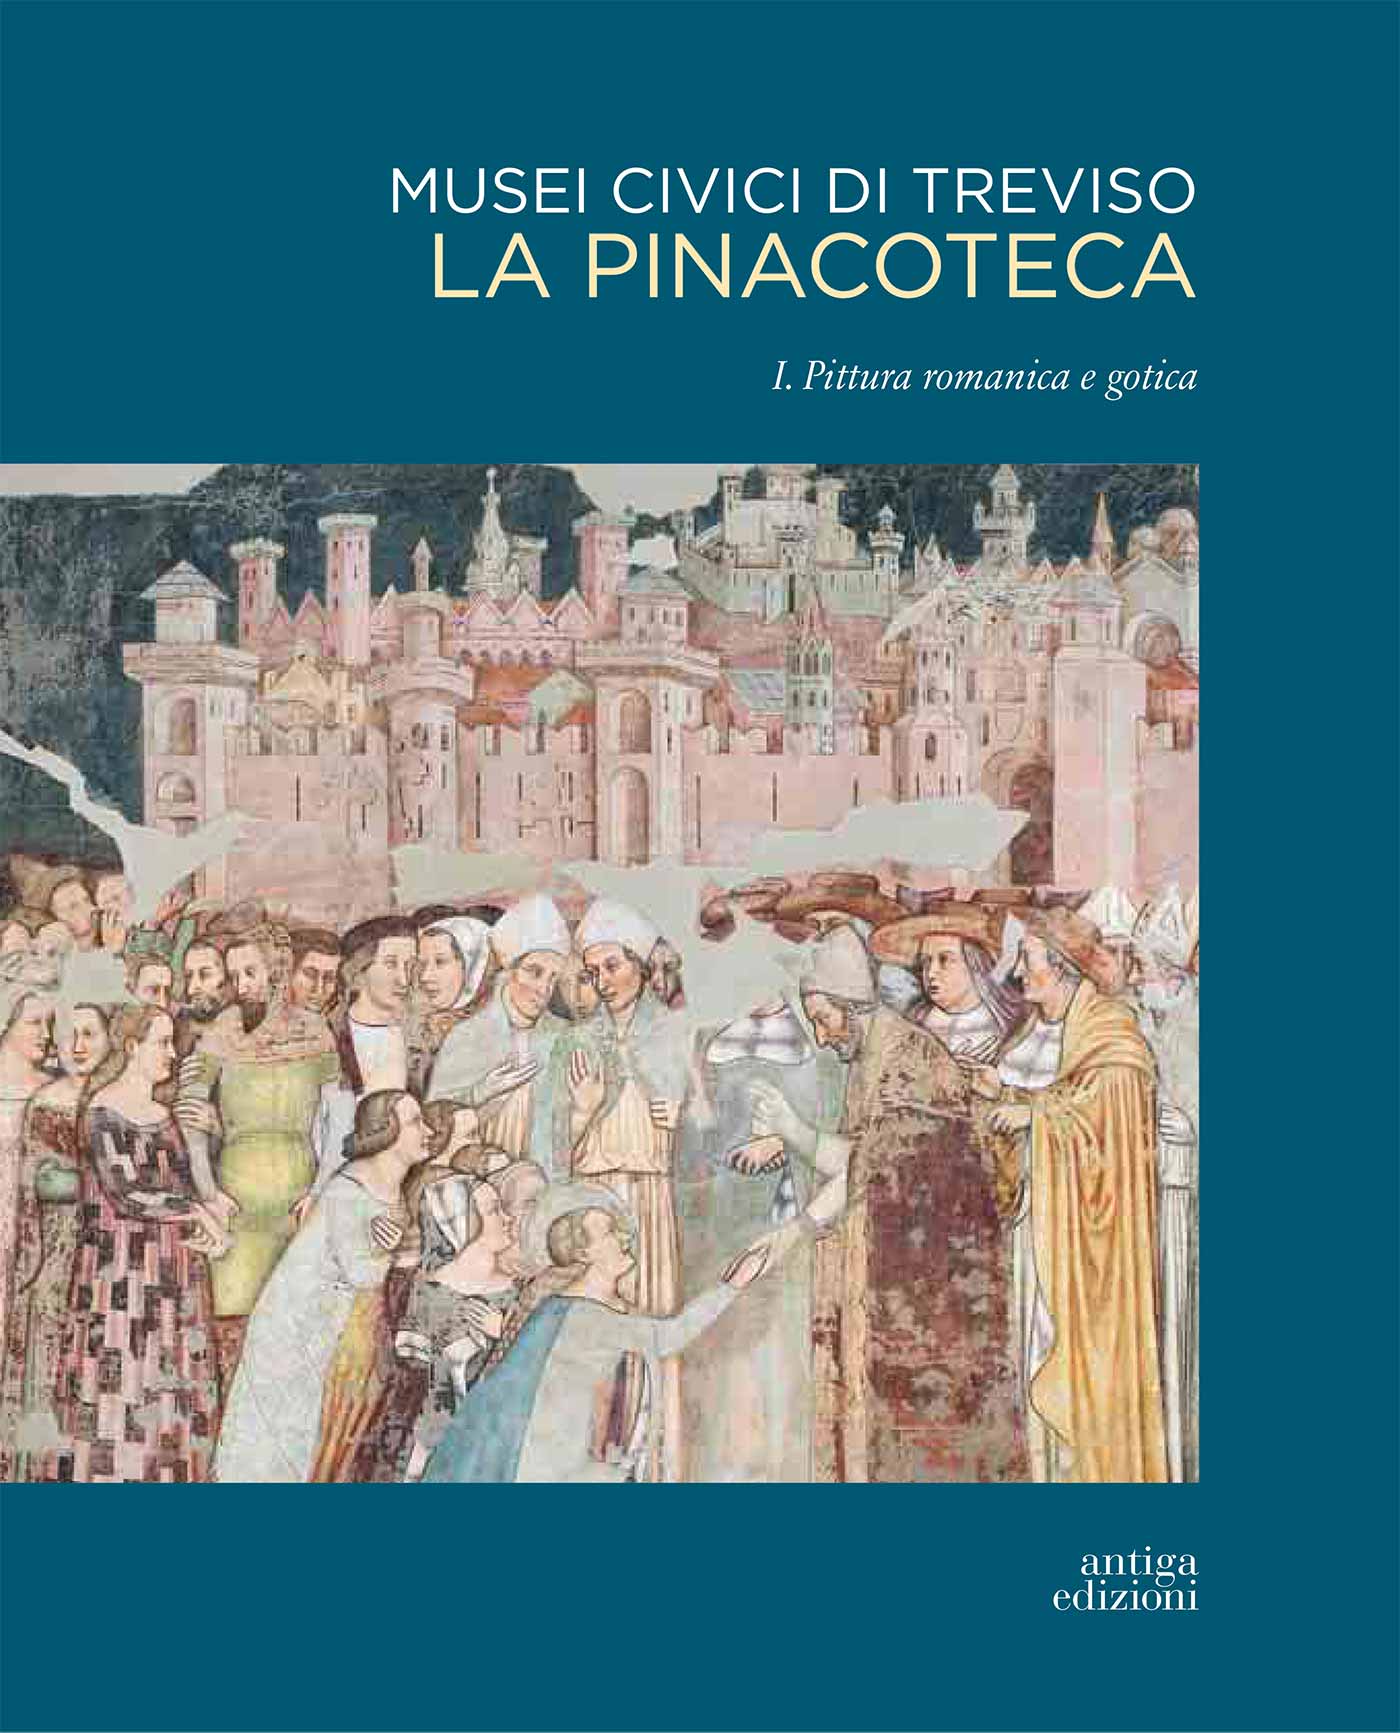 Catalogo generale Pinacoteca Civica Treviso - I volume